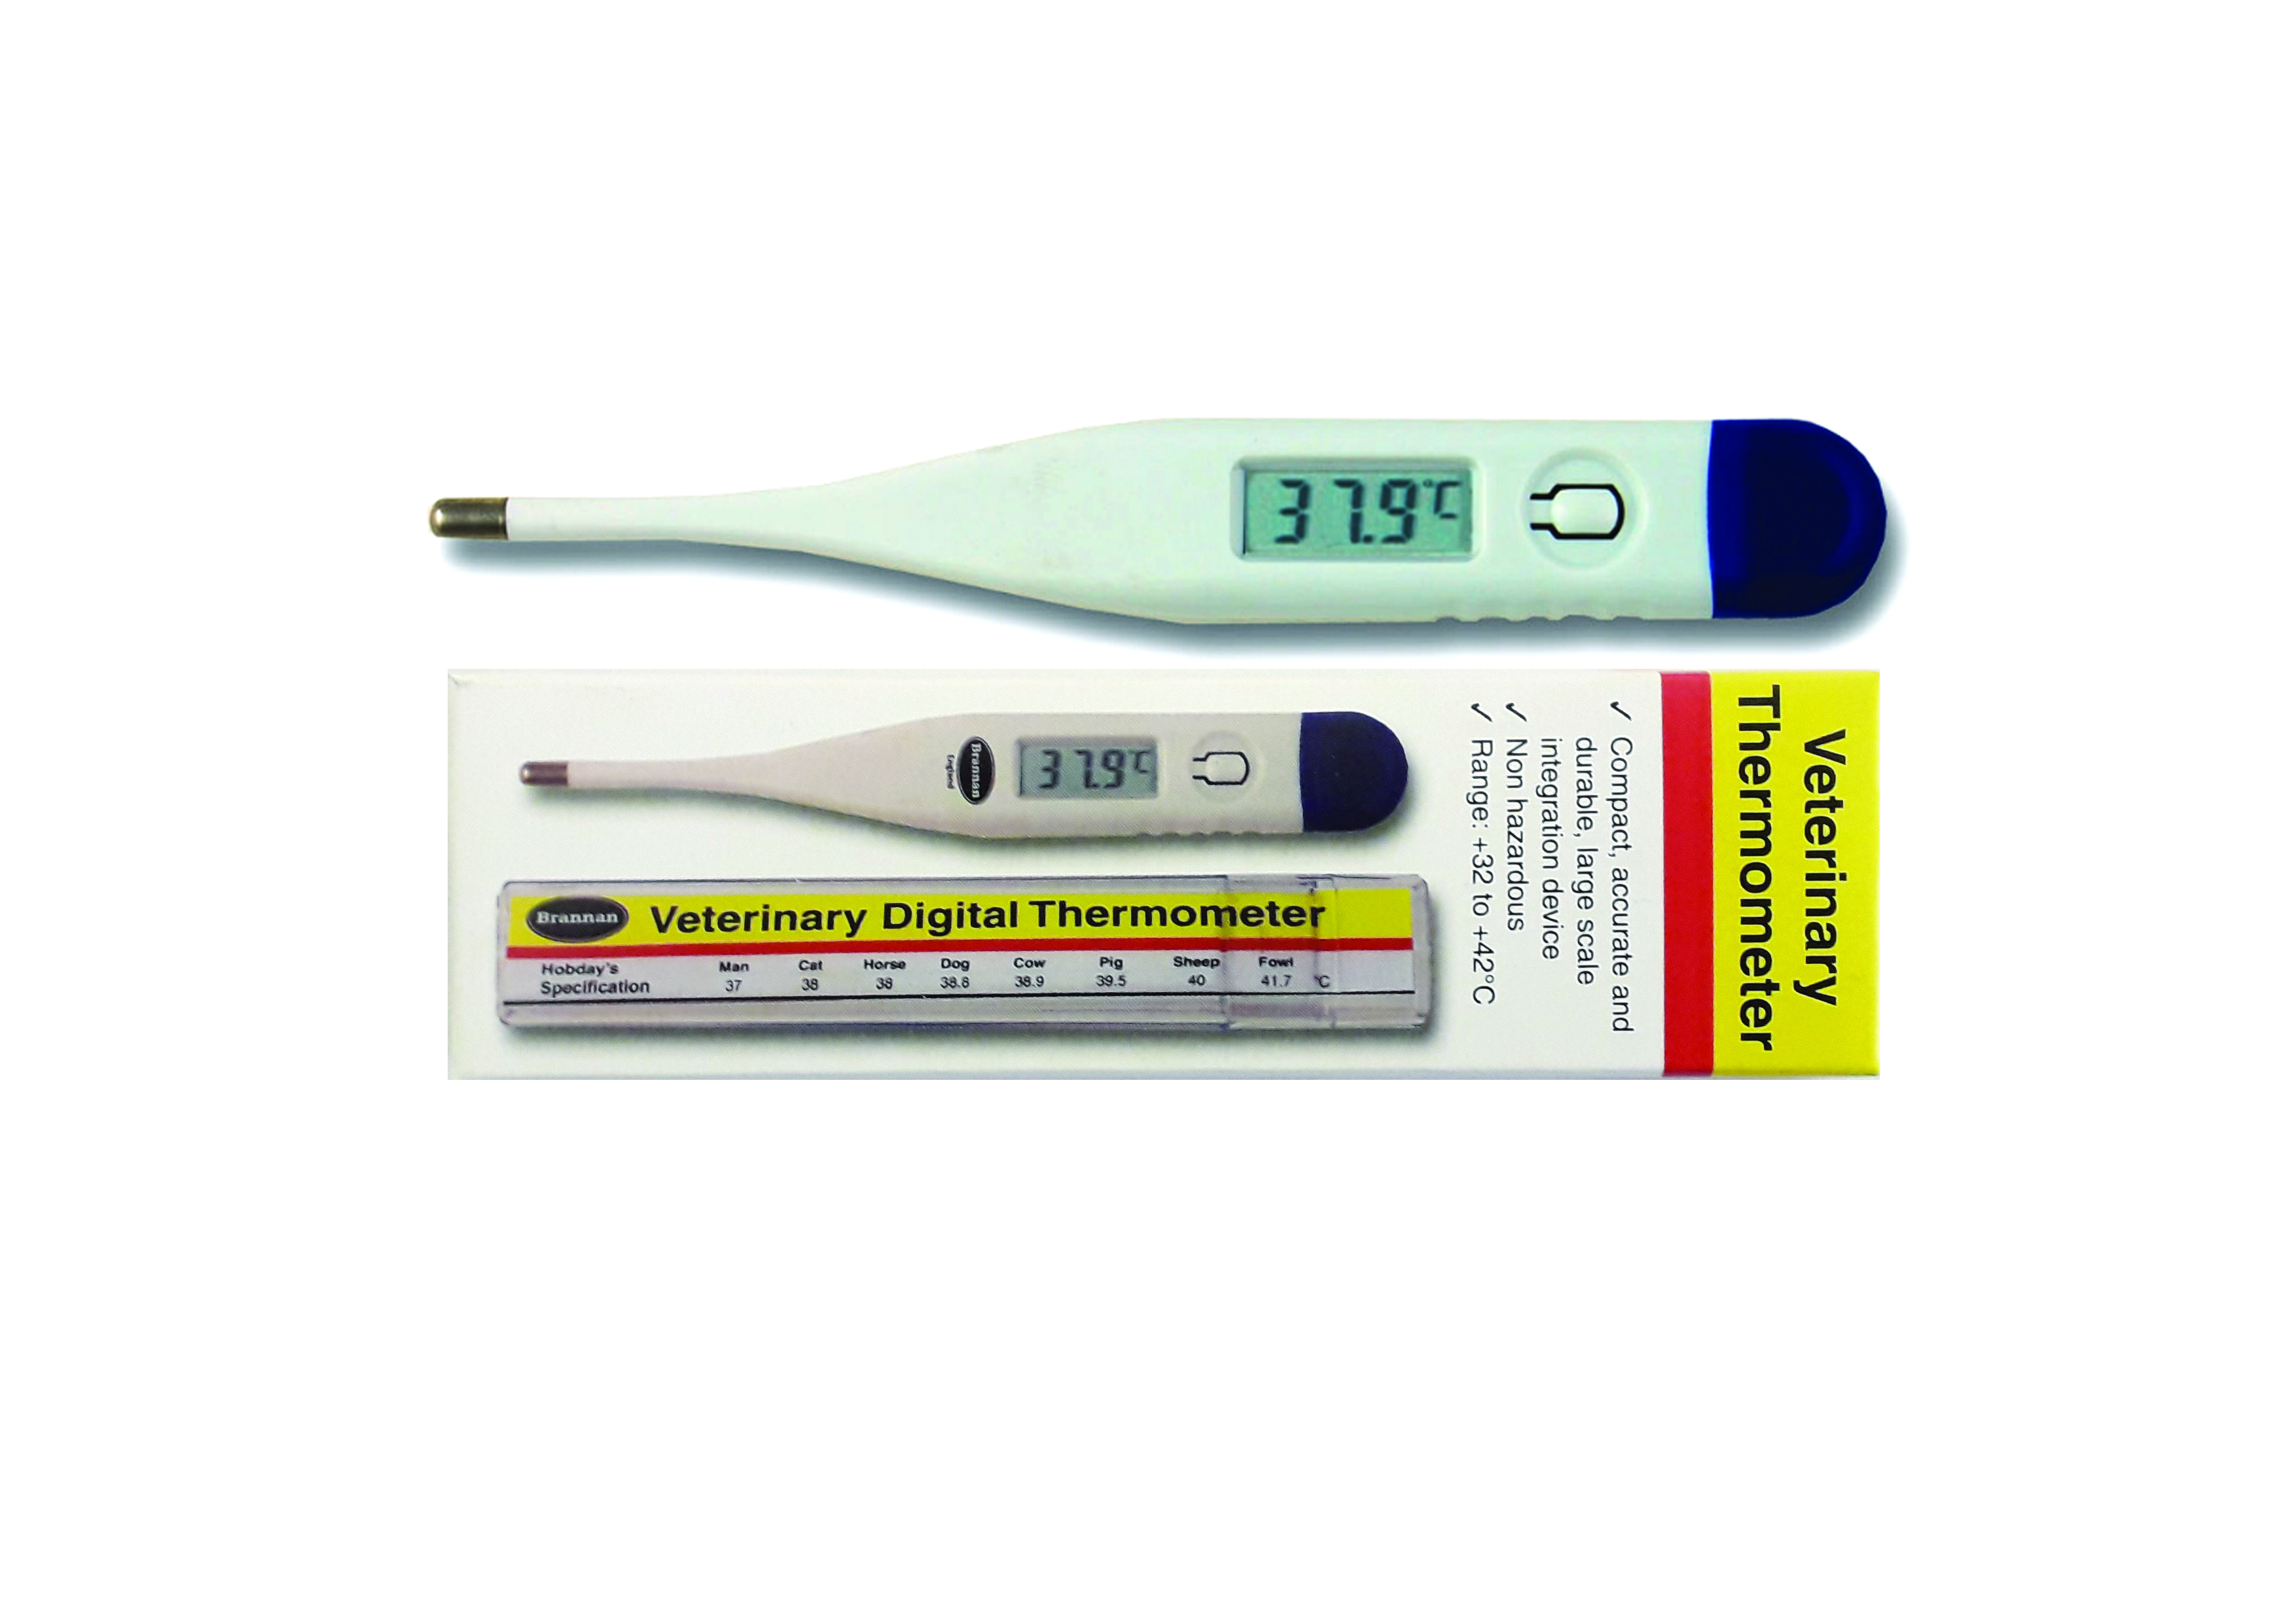 Veterinary Digital Thermometer Celcius and Fahrenheit